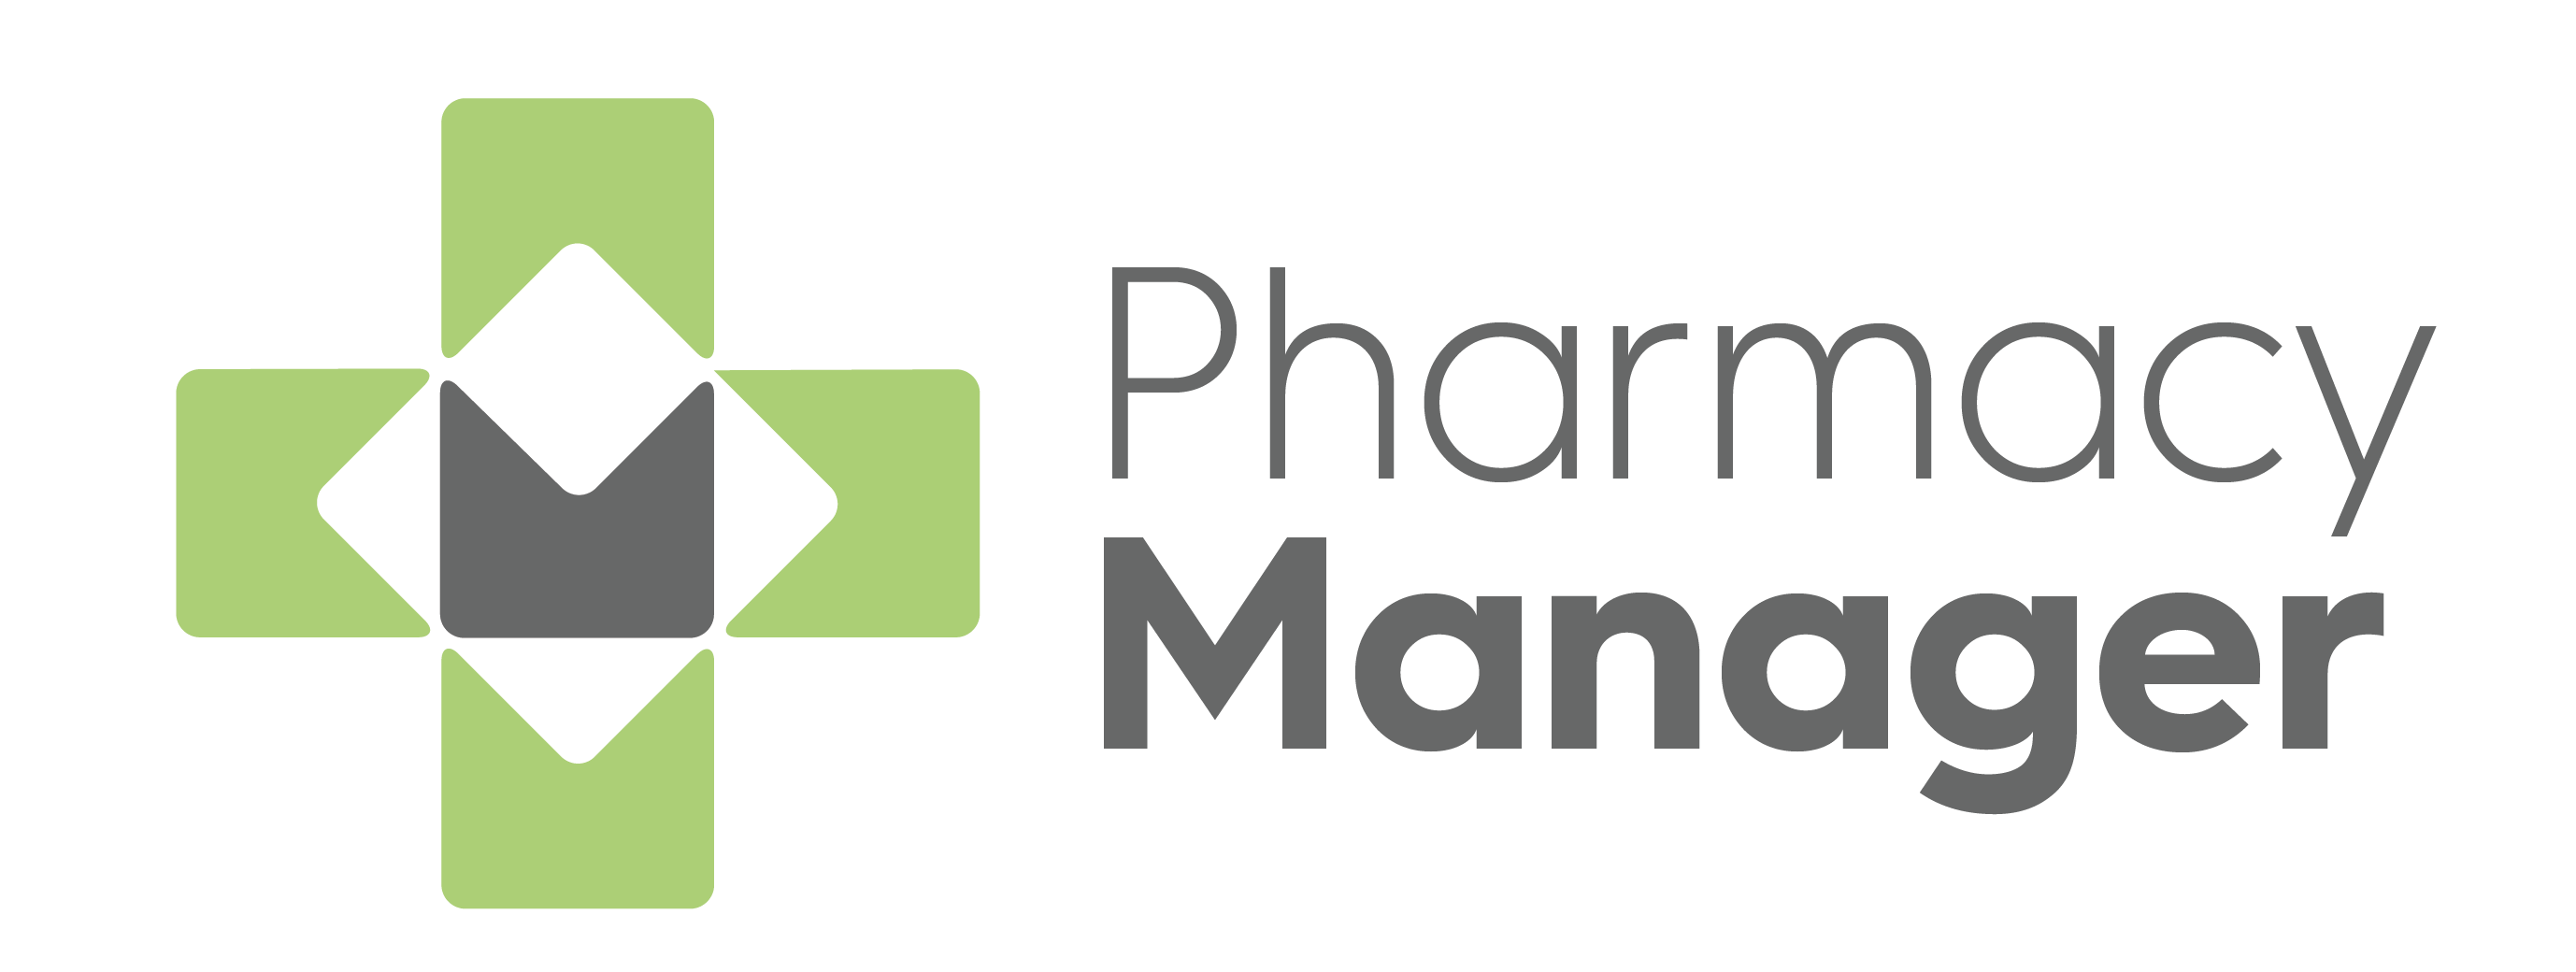 CHS_Pharmacy Manager logo-1